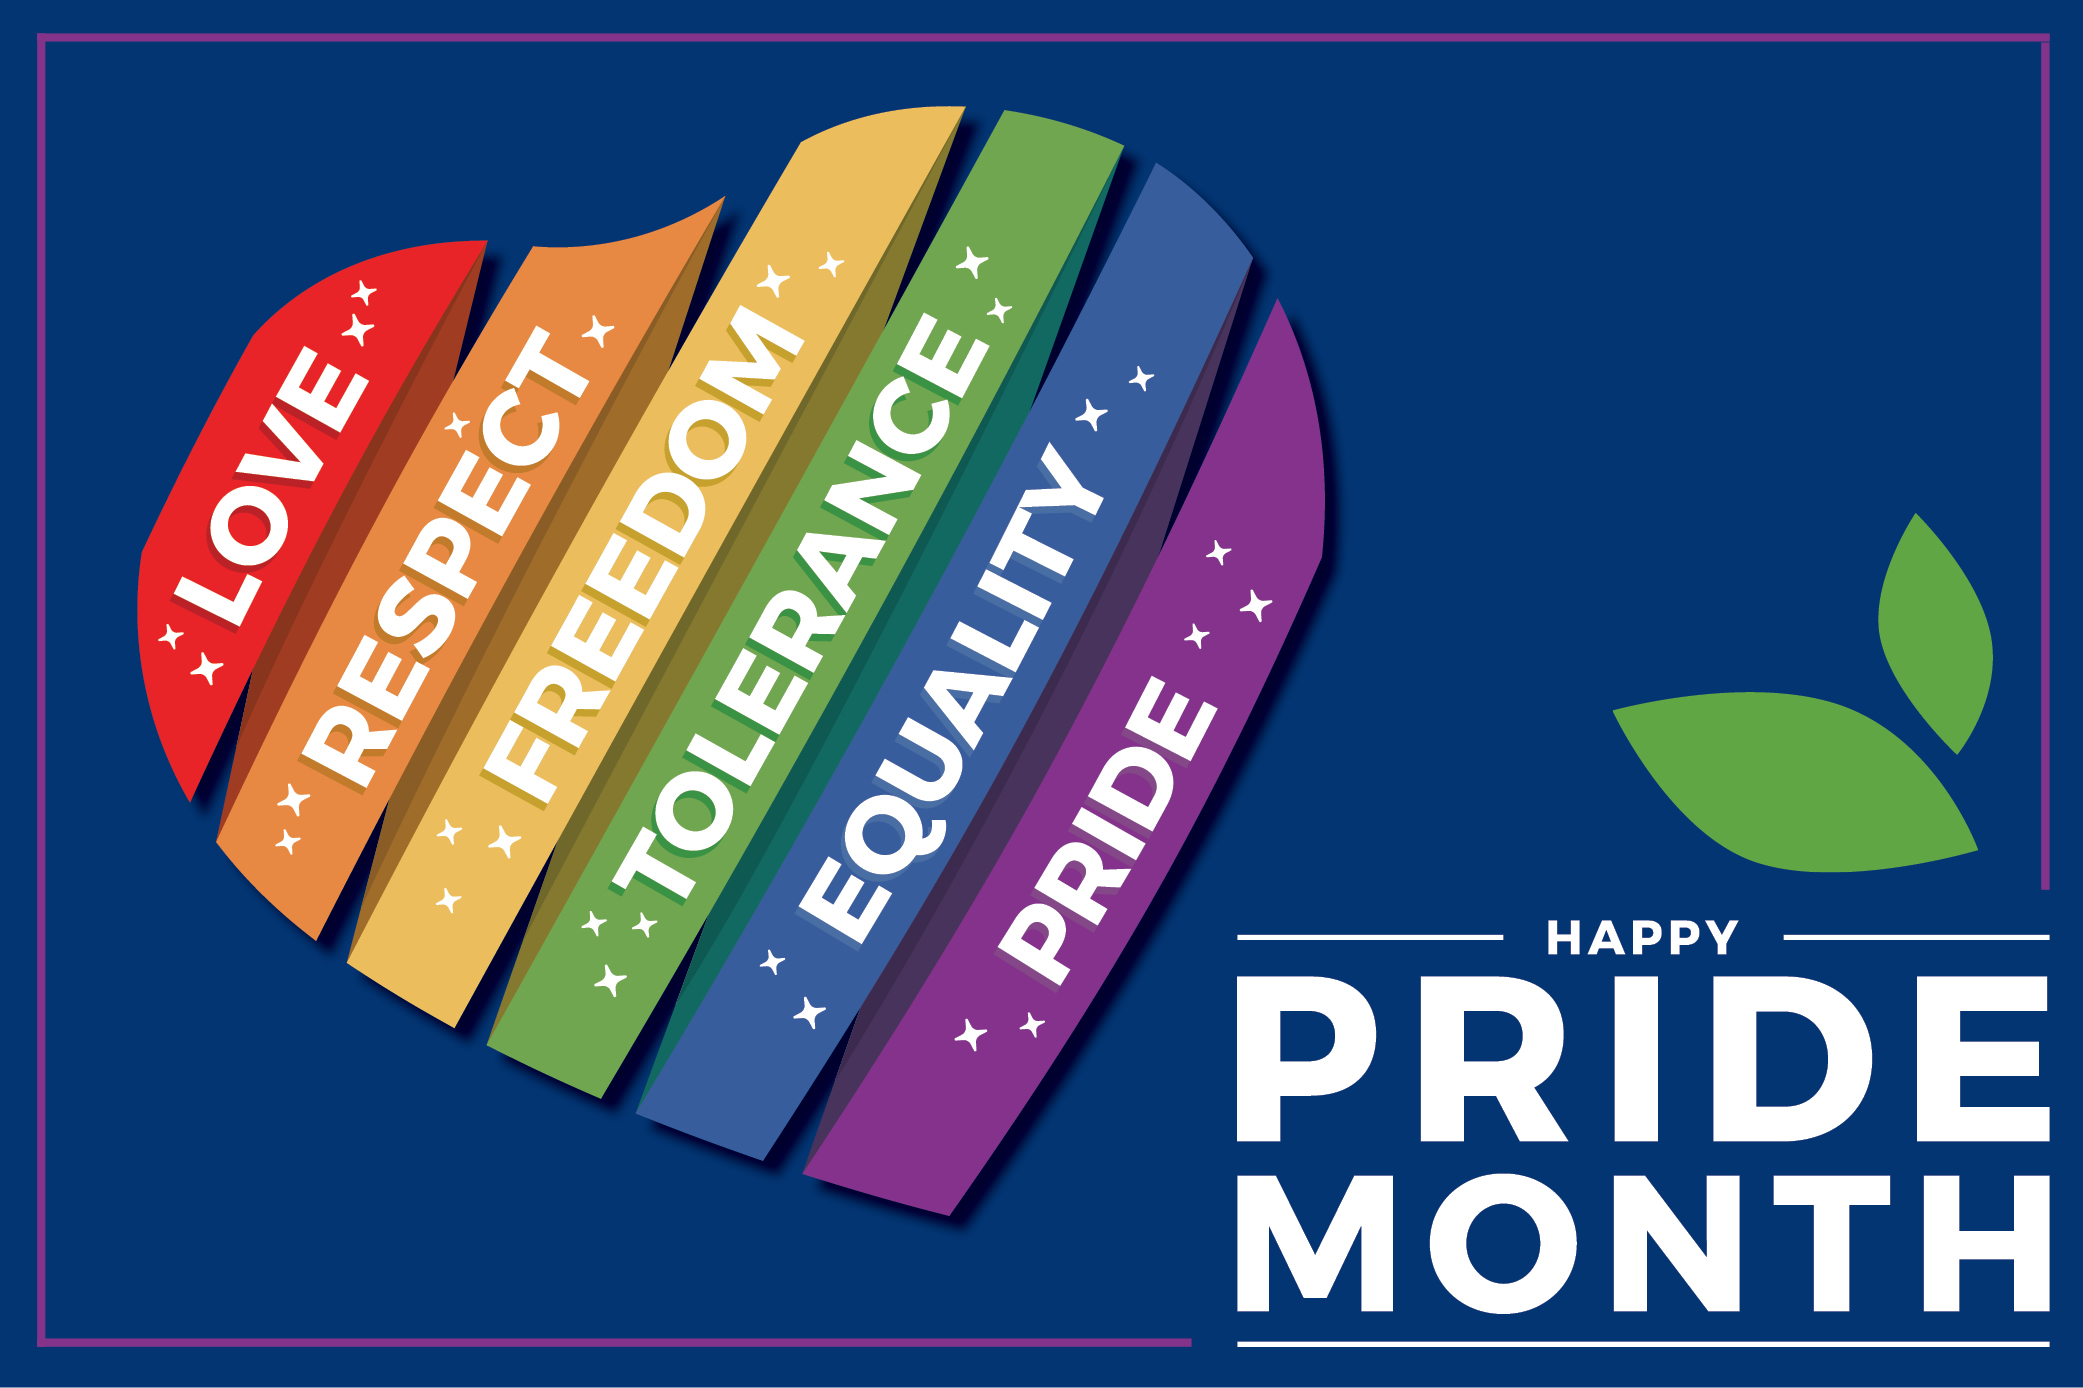 Pride Month Graphic